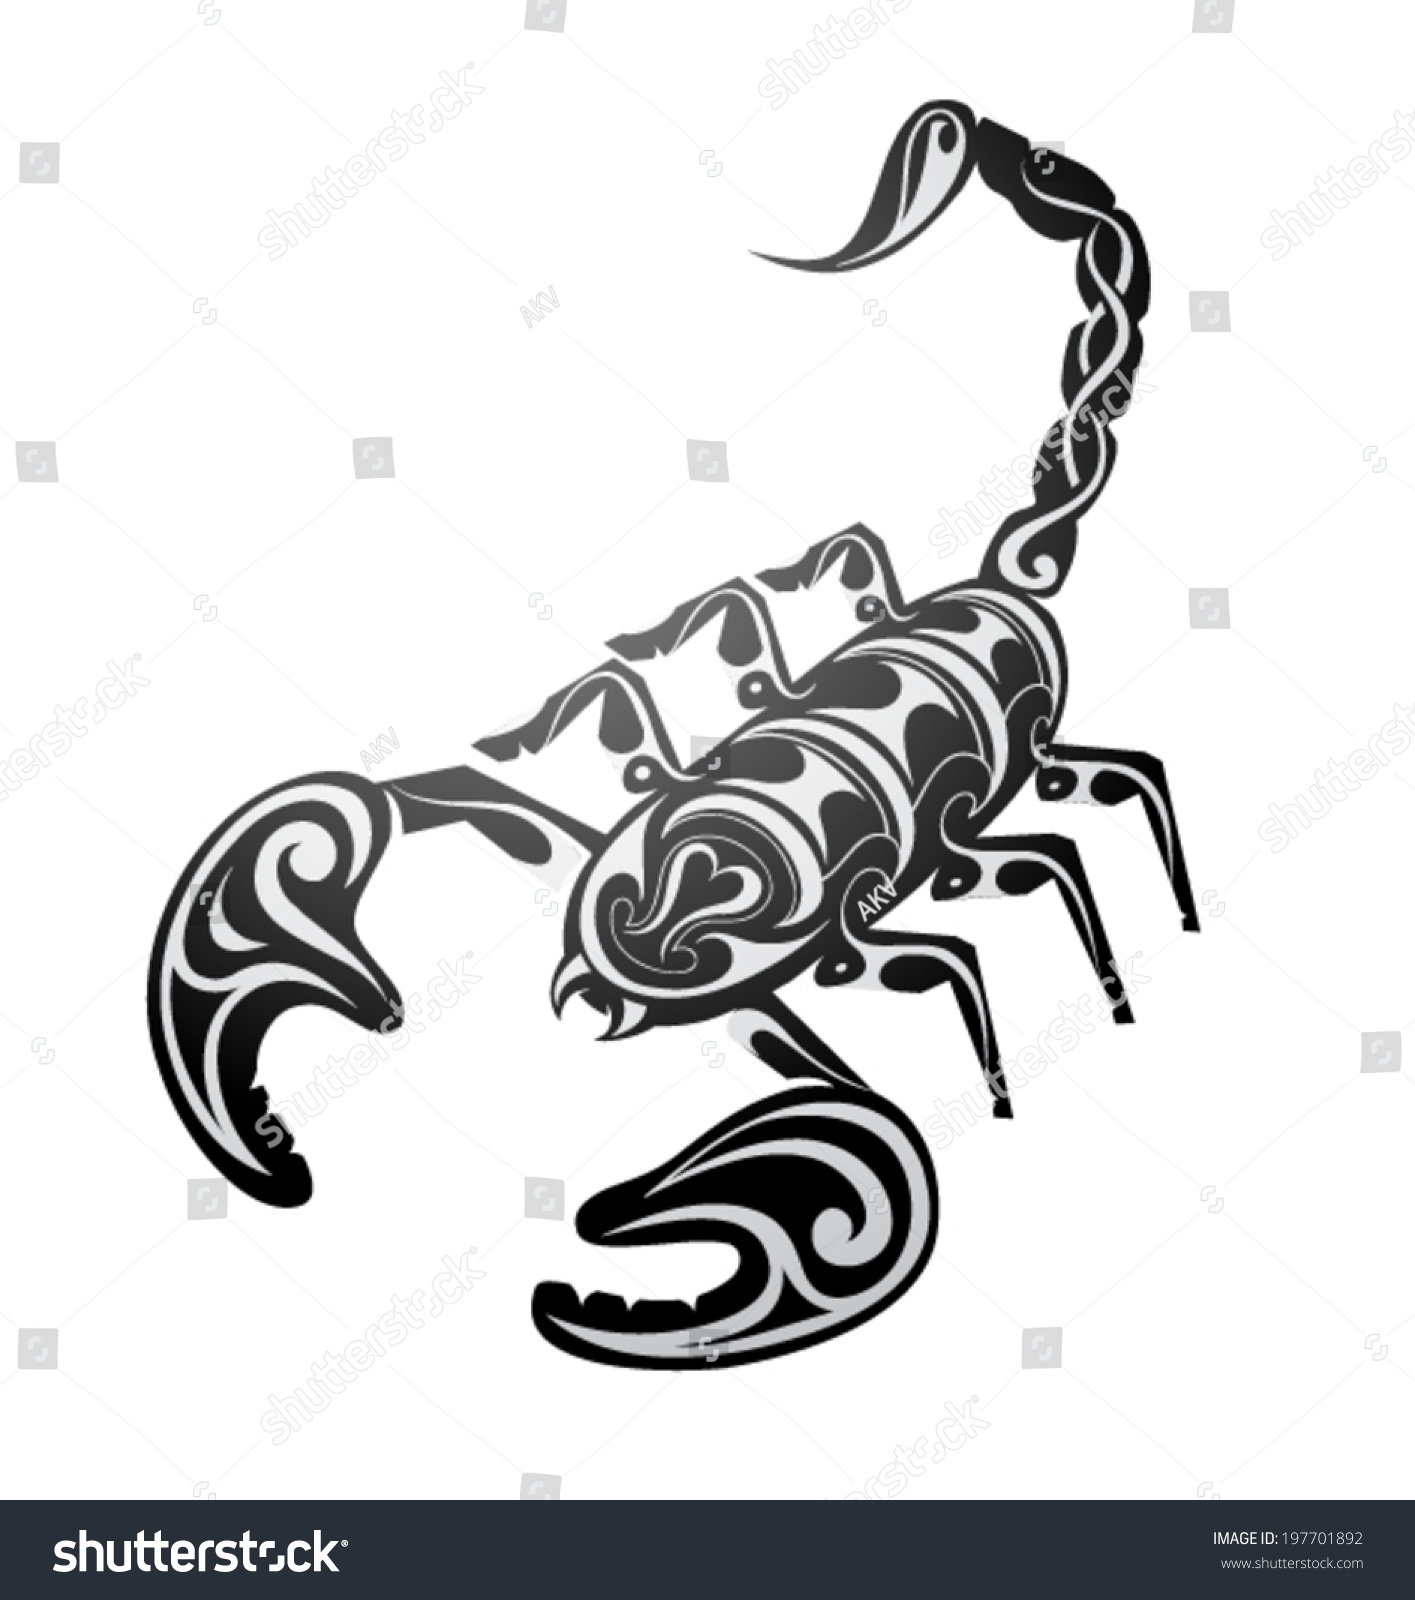 Scorpion Tattoo Stock Vector (Royalty Free) 197701892 - Shutterstock